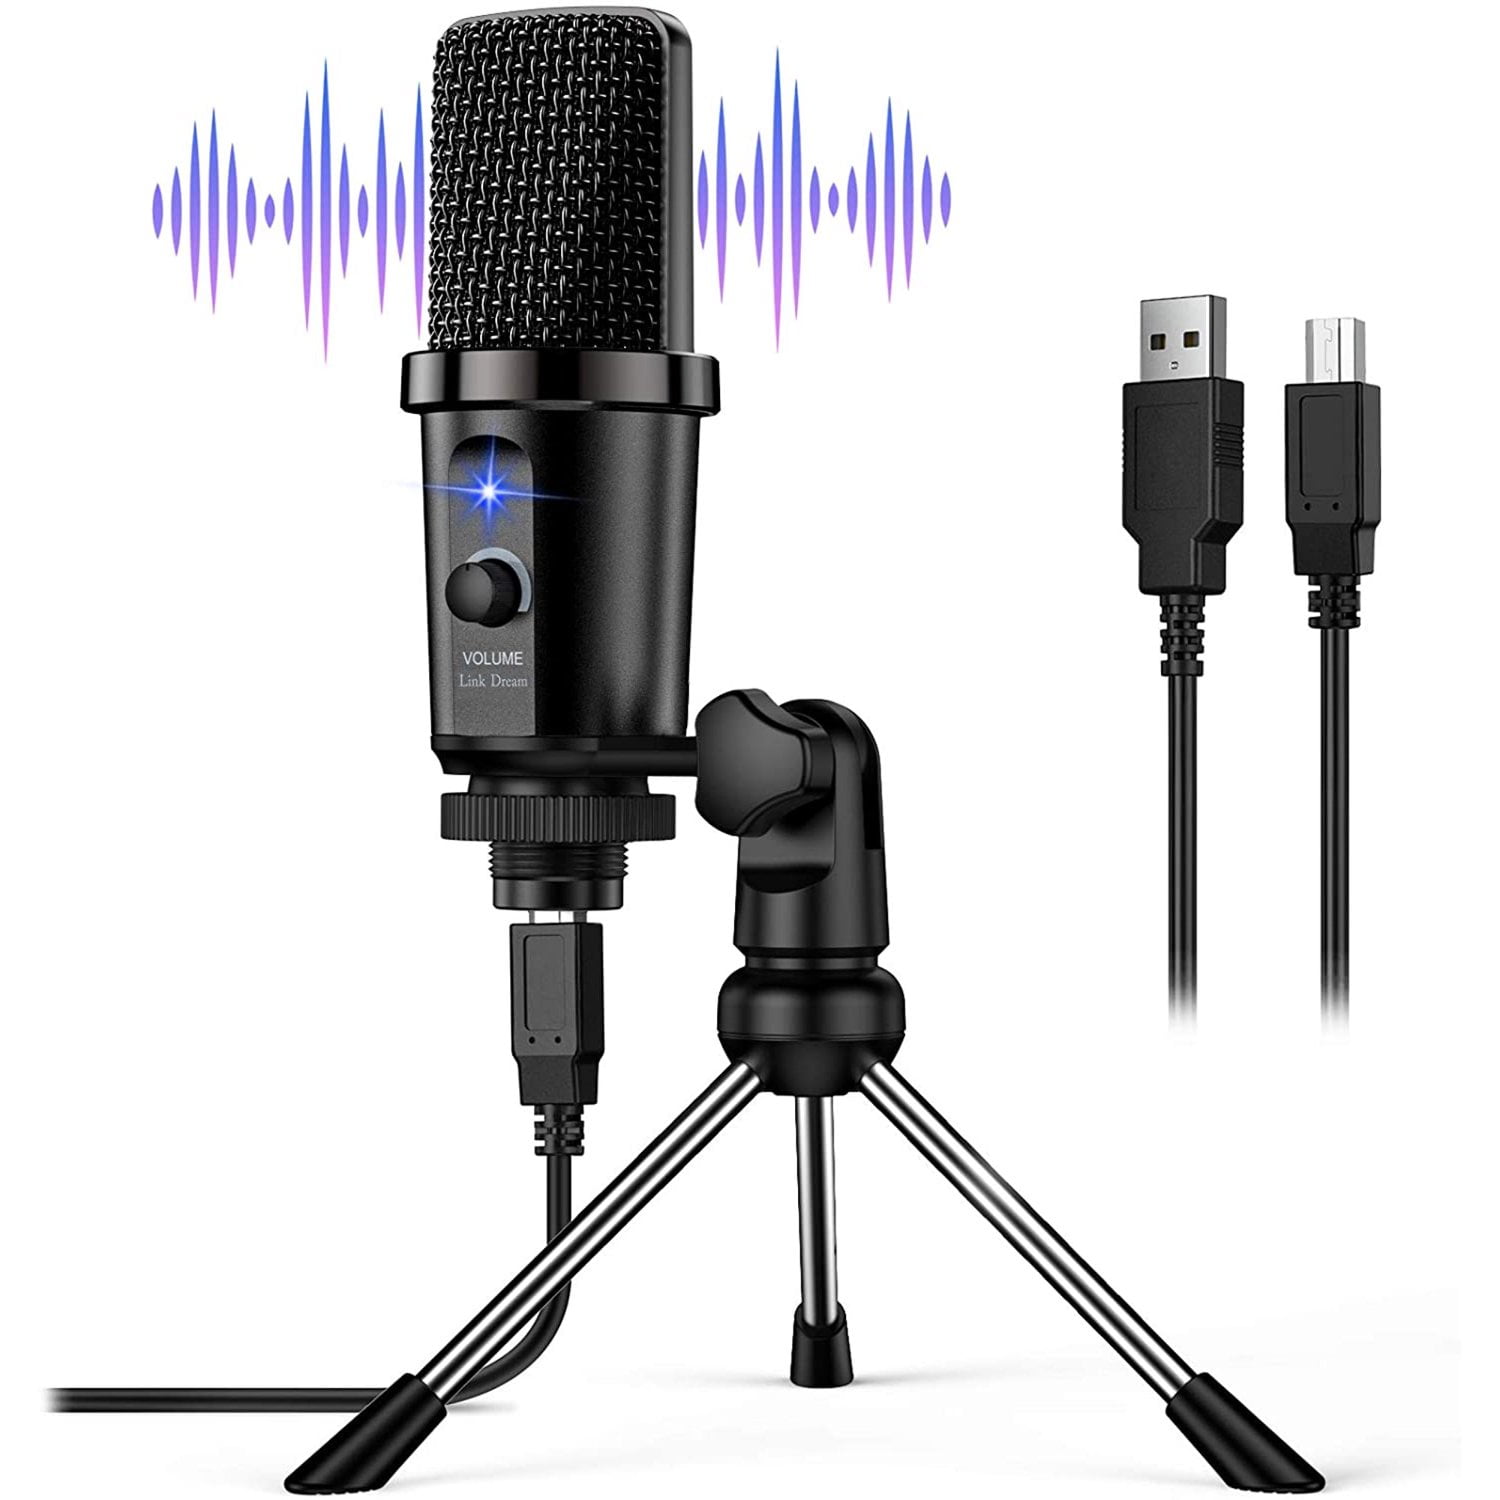 New Bee Microphone USB avec Support Plug et Play Microphone PC Volume réglable USB pour ordinateur portable Youtube Skype Mac Zoom 